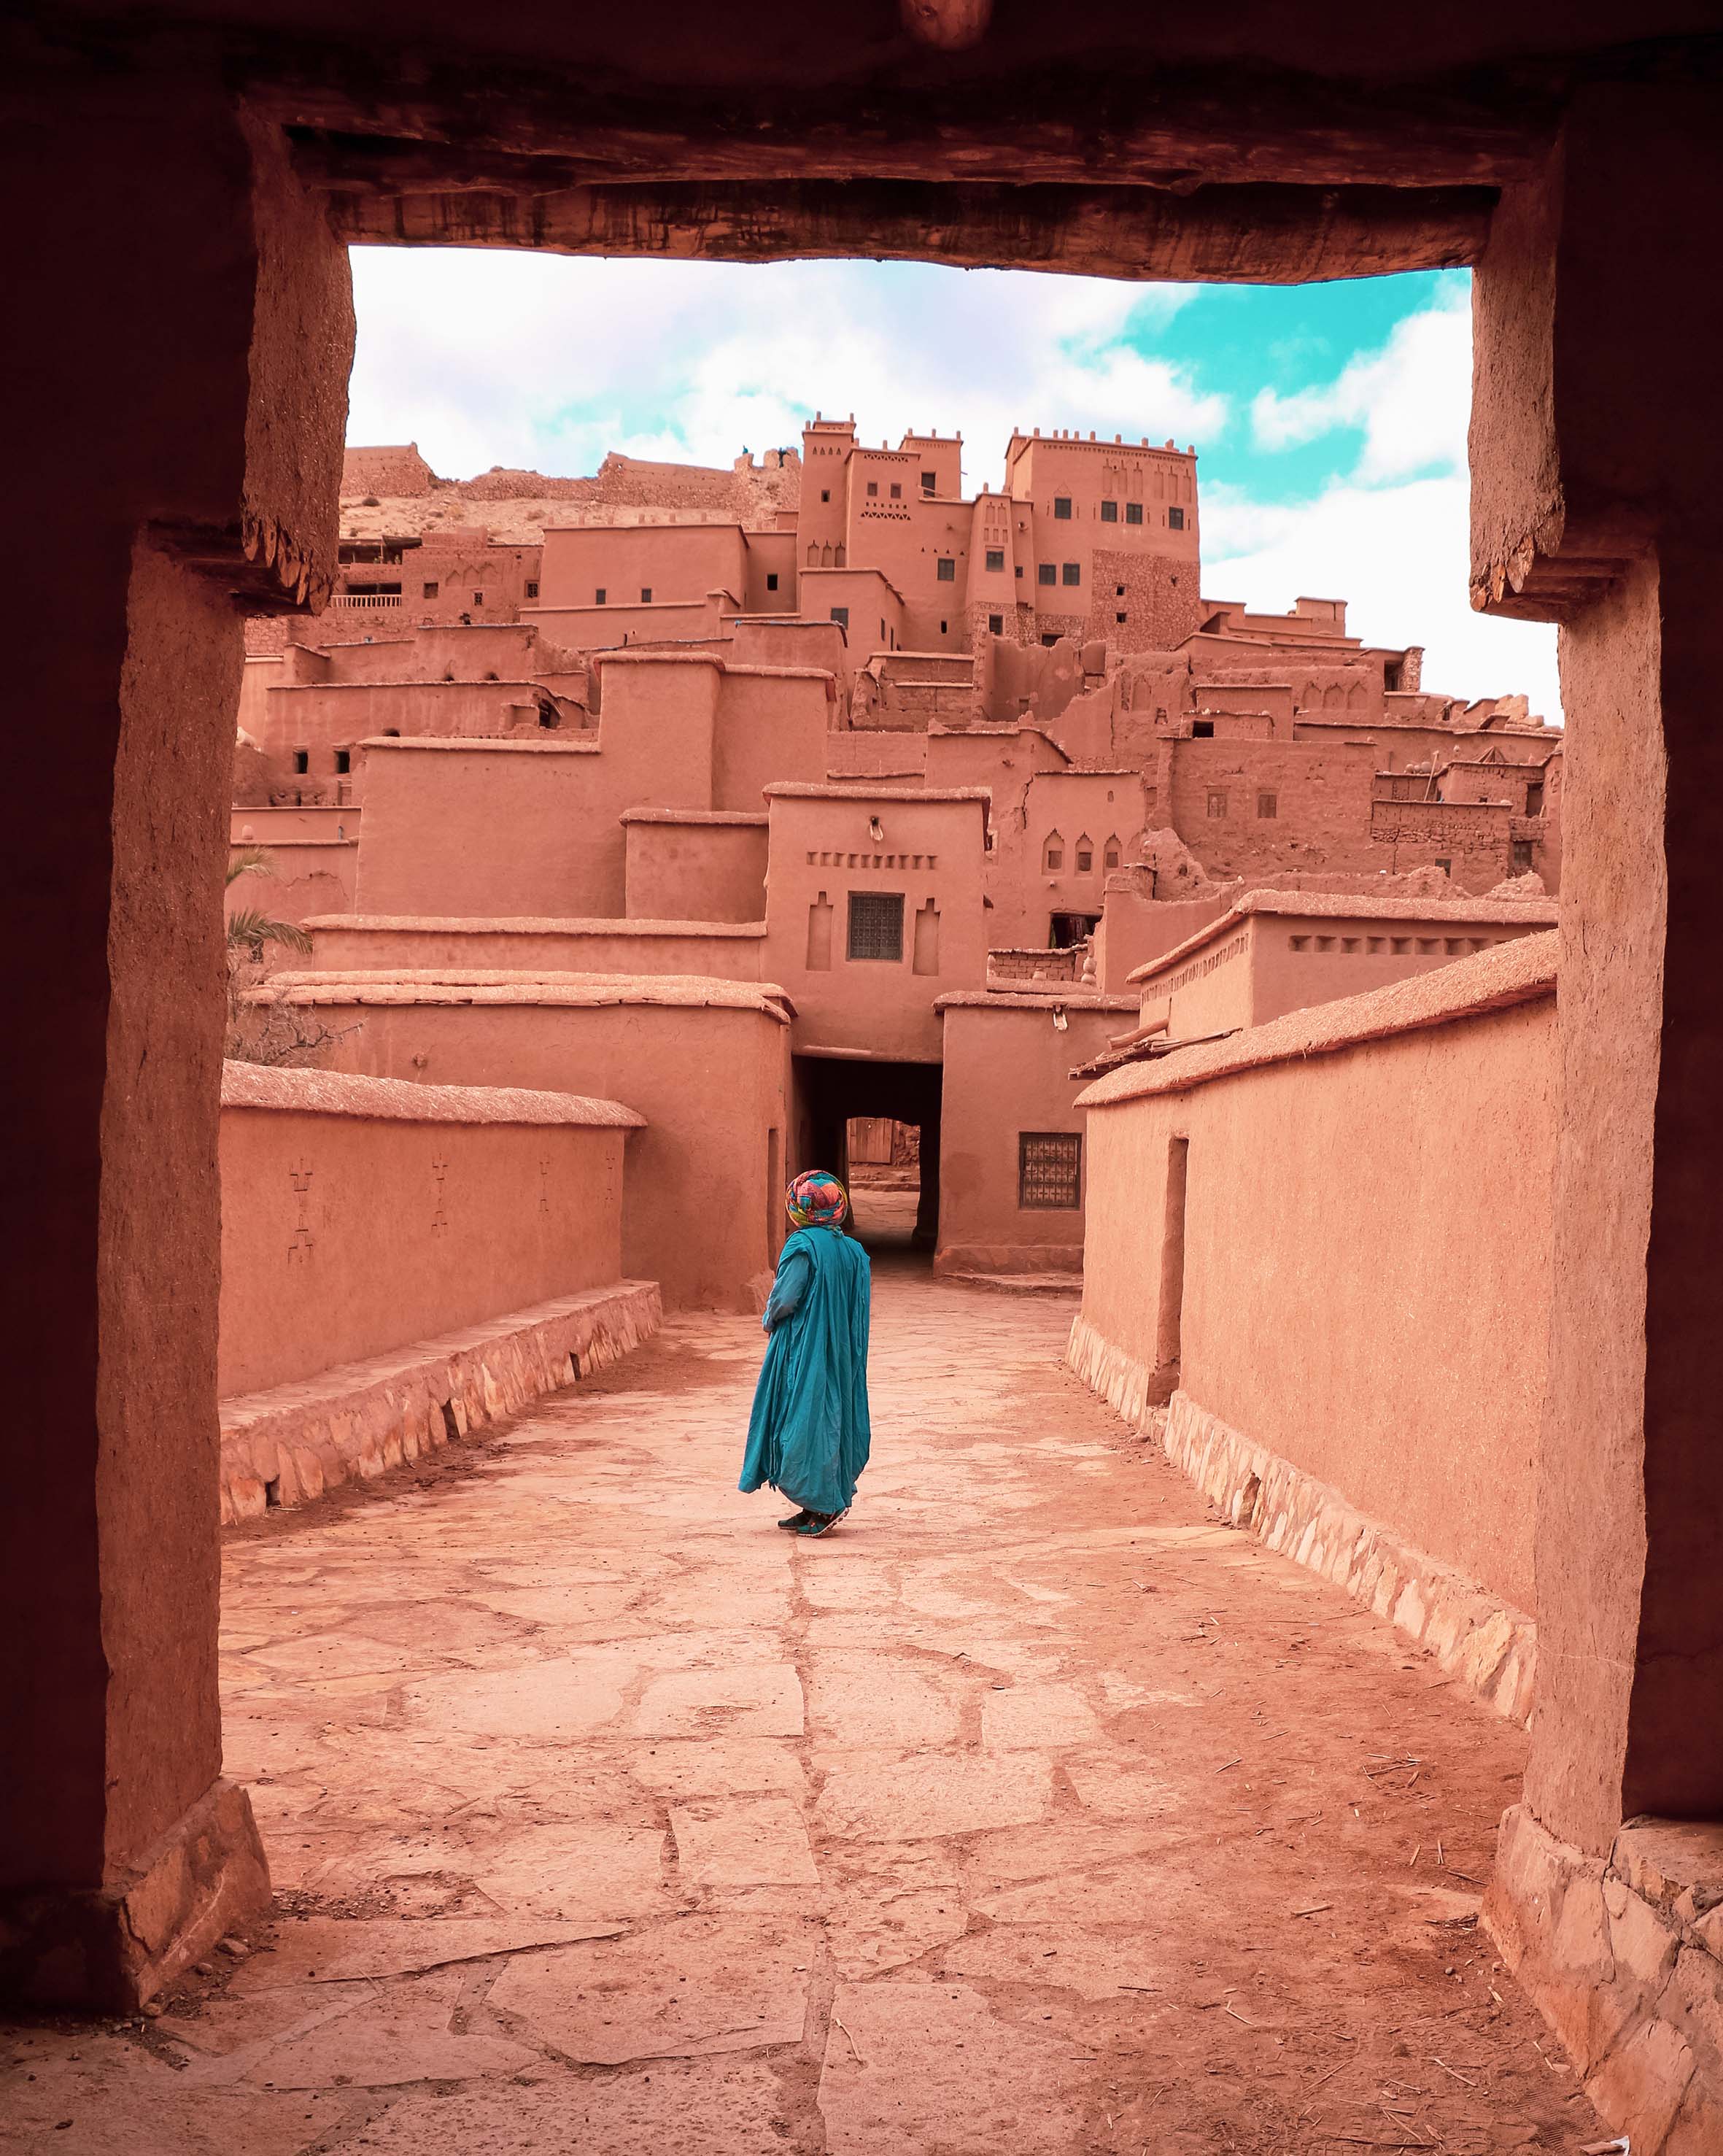 Viaje fin de año a Marruecos 27 dic. 2022 al 03 ene. 2023 | Turismo responsable